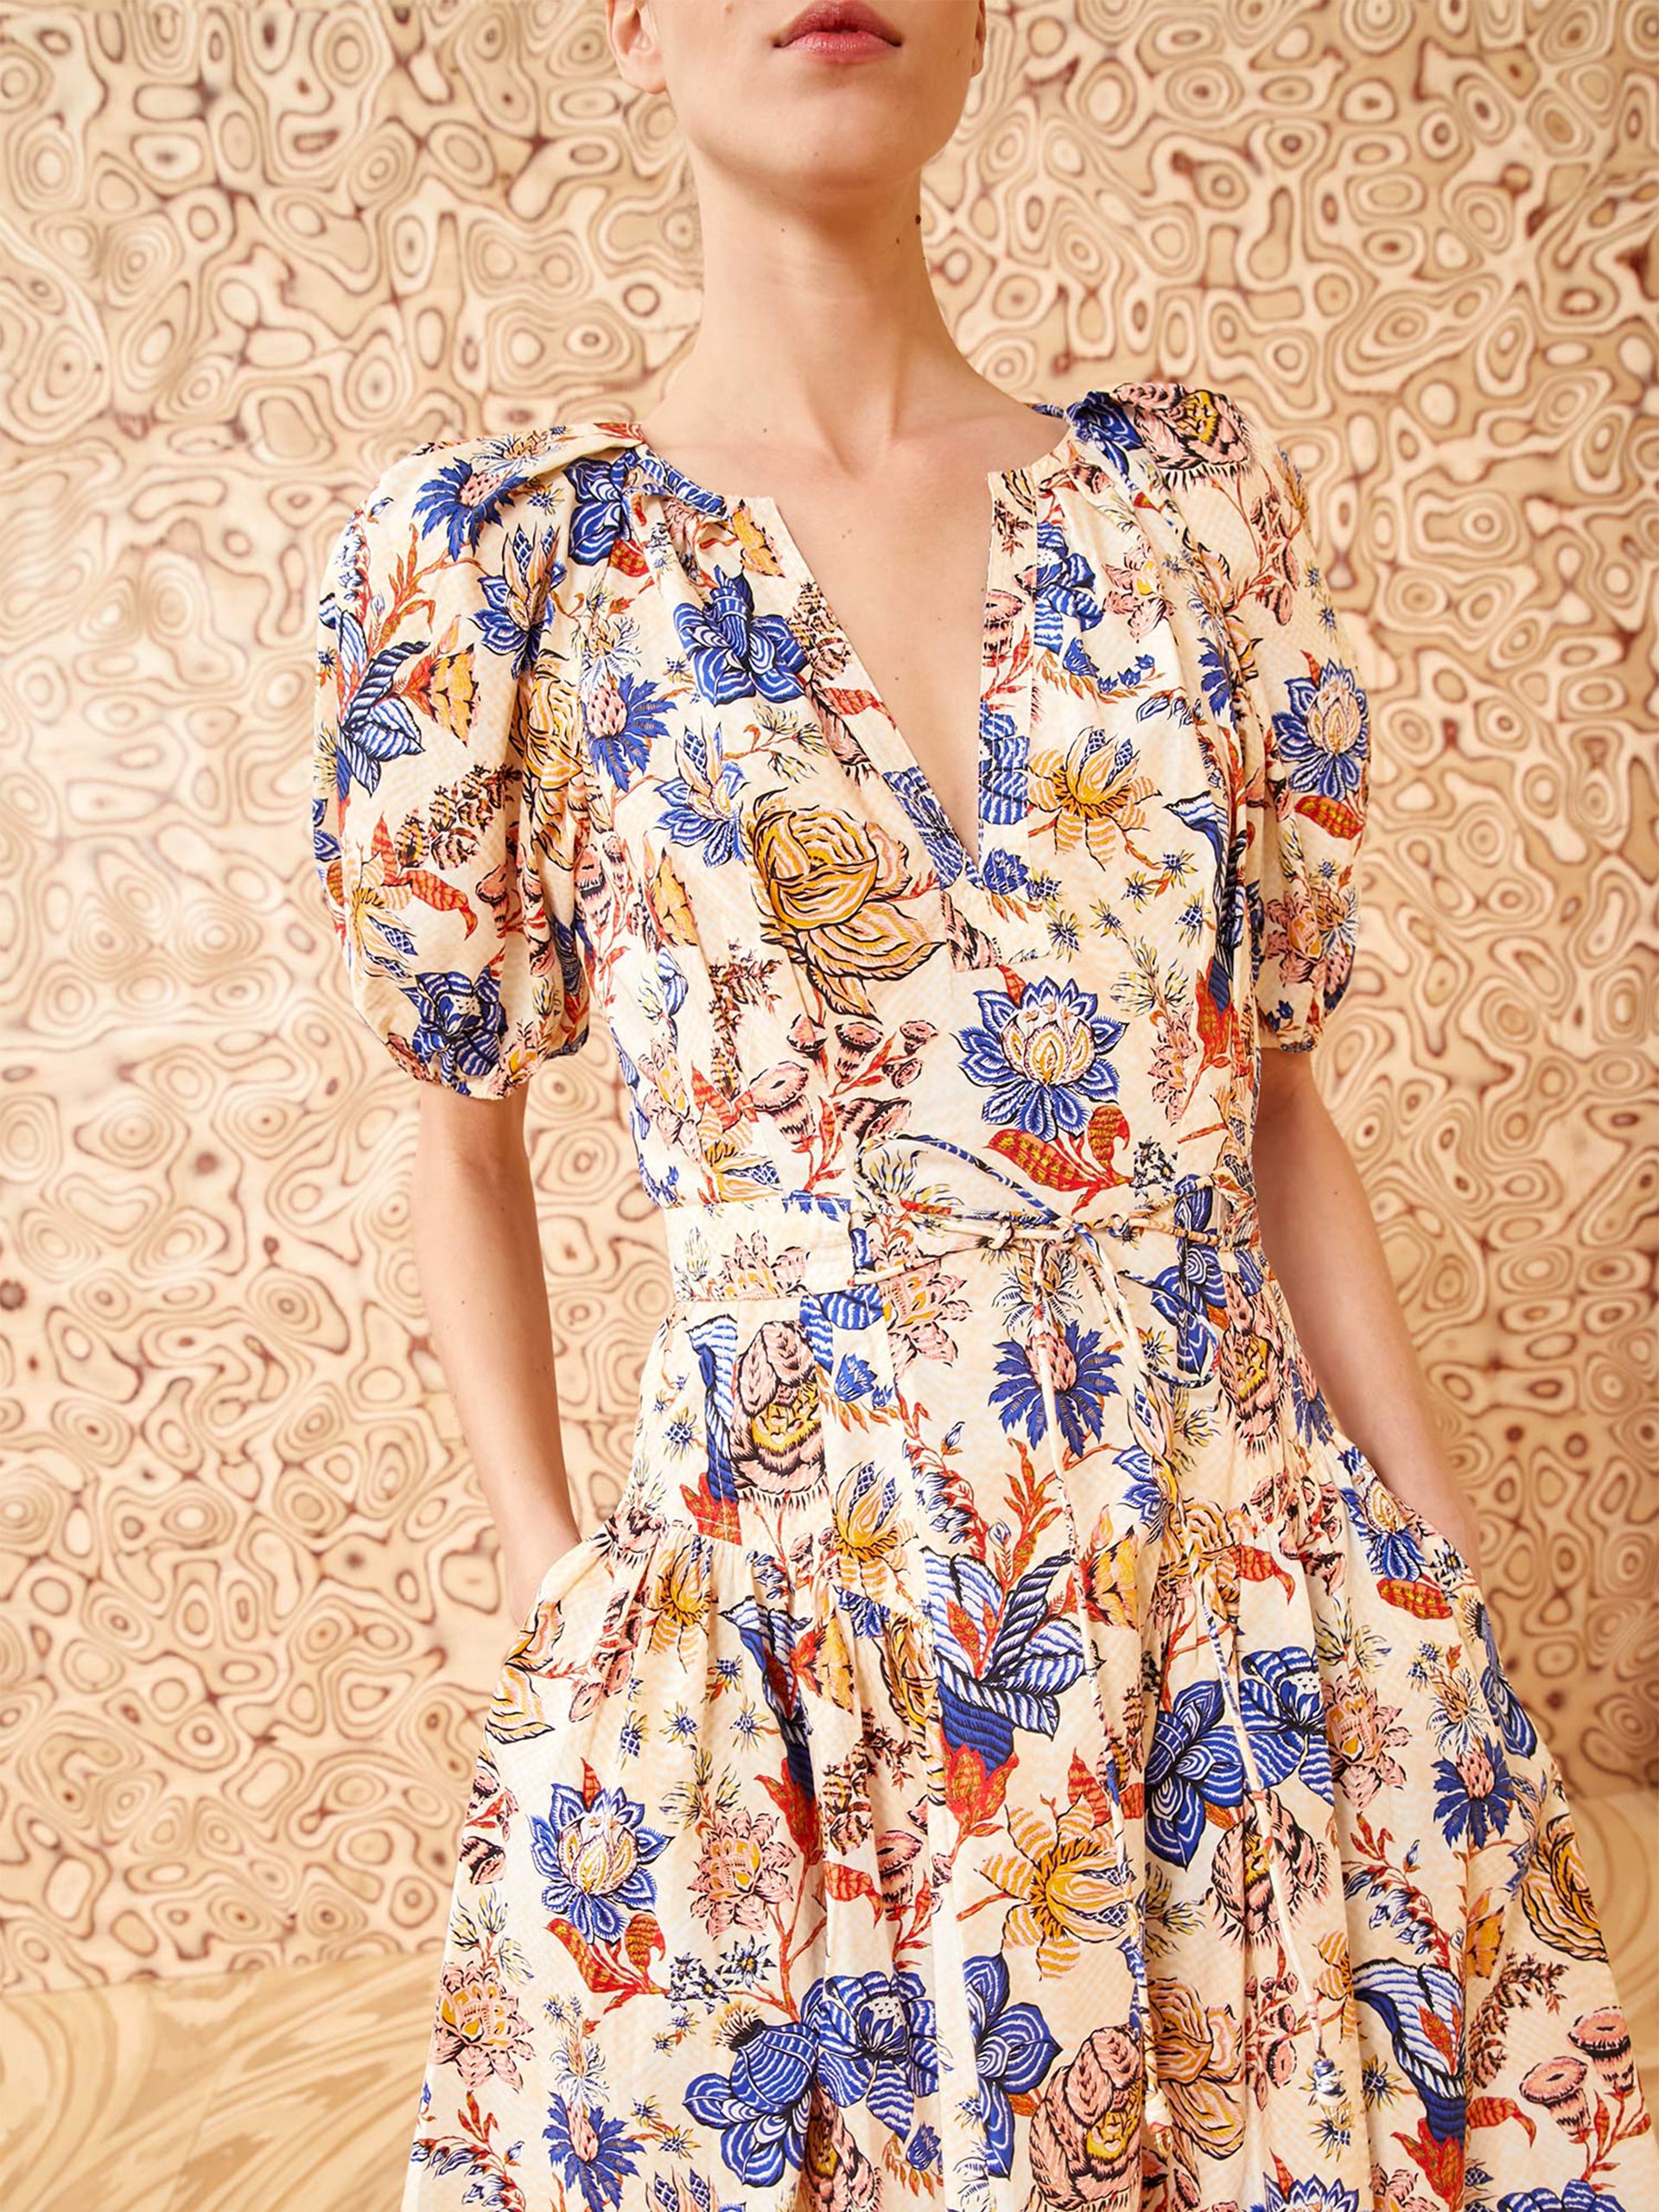 ULLA JOHNSON - Carina Kleid mit Blumenmuster